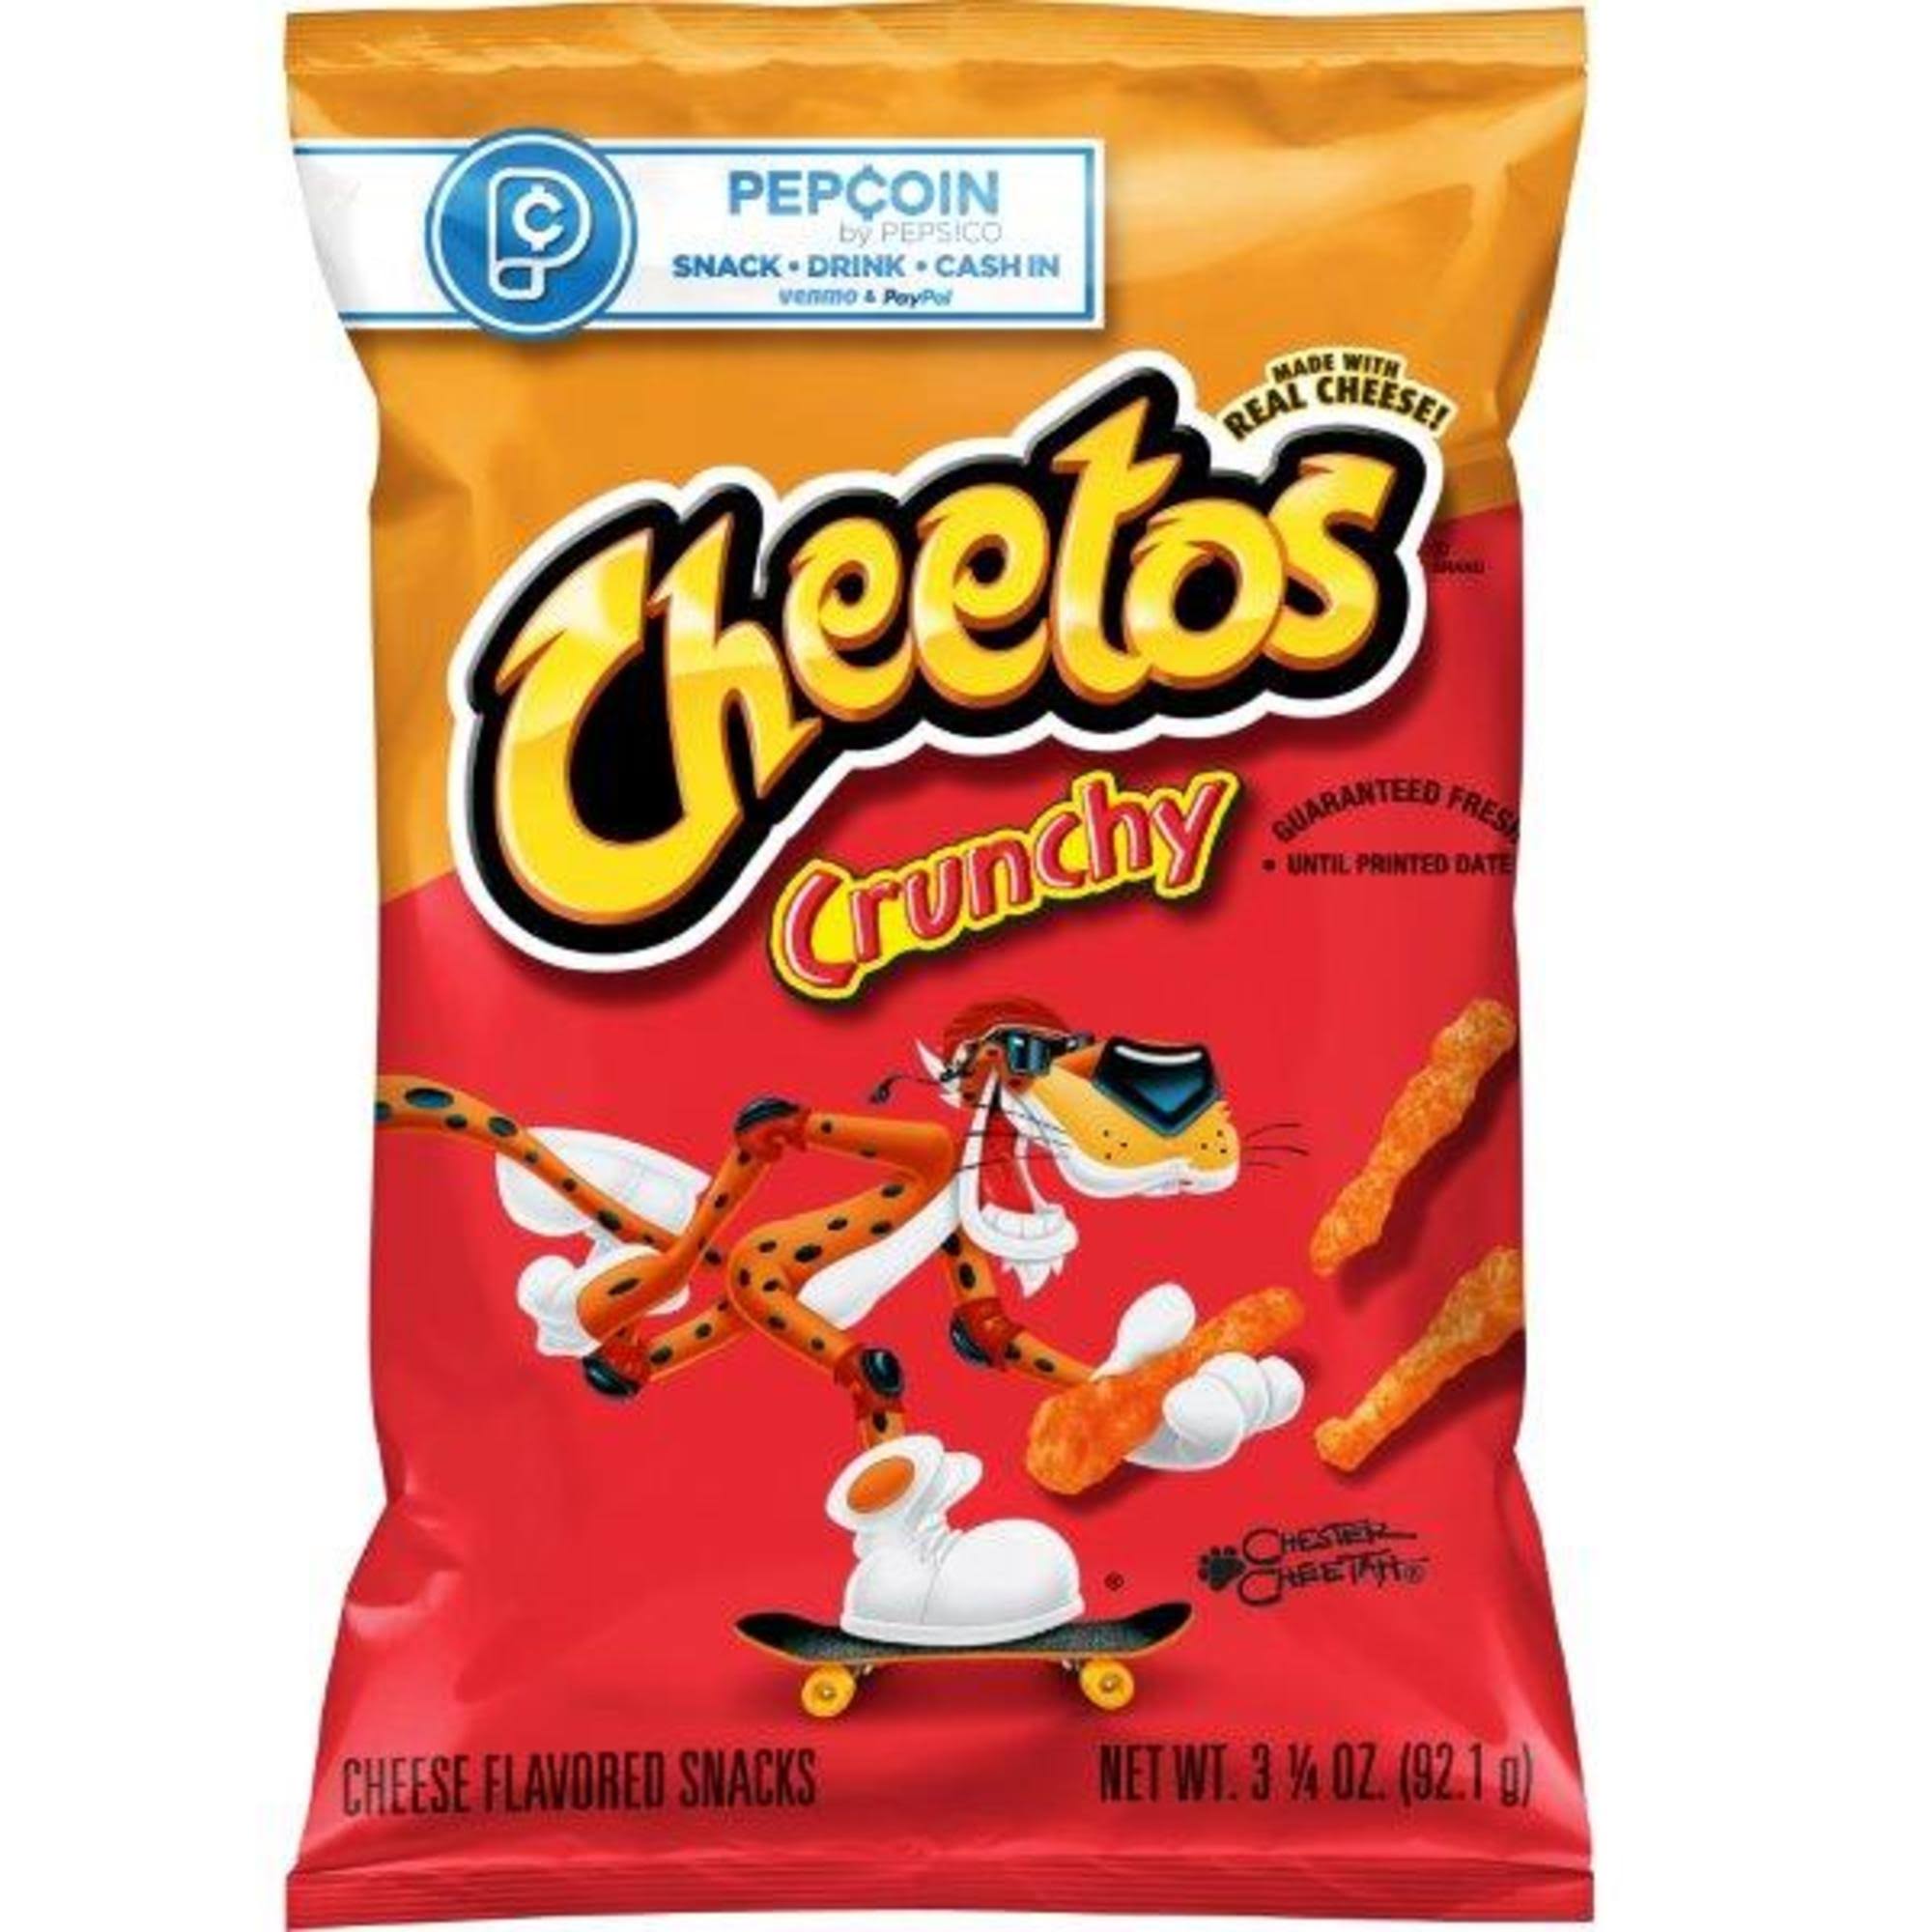 Cheetos Cheese Flavored Snacks, Crunchy - 3.25 oz